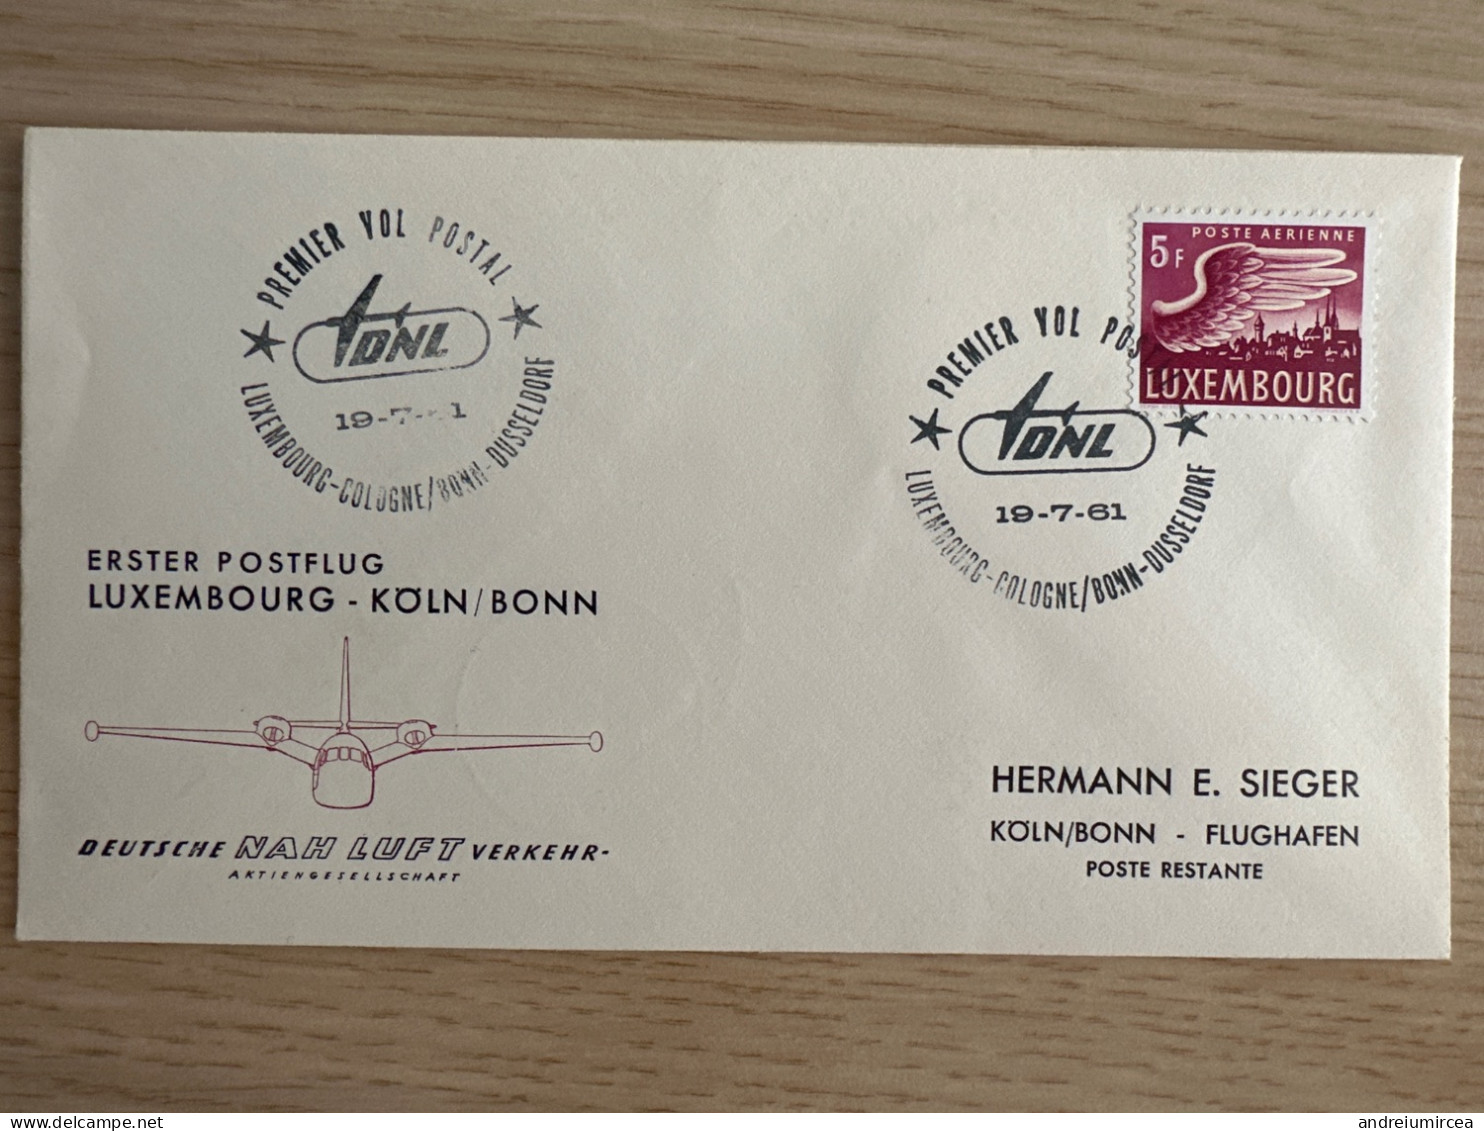 1961 Premier Vol Postal Luxembourg-Koln/Bonn - Lettres & Documents